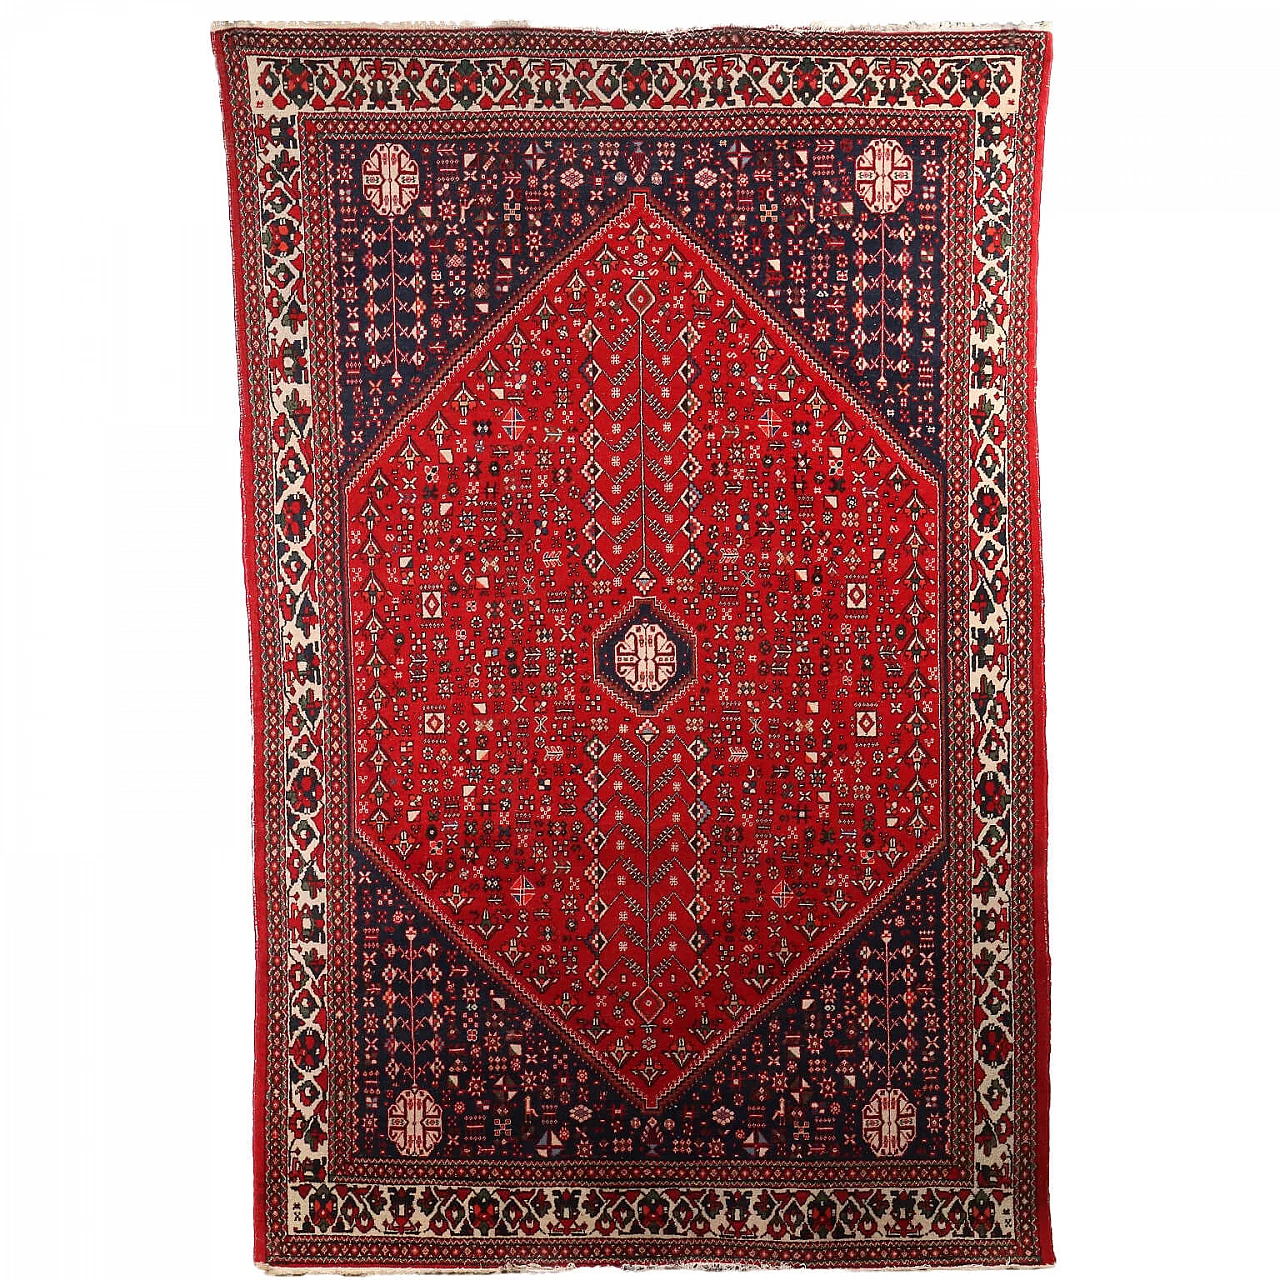 Iranian cotton and wool Kaskay rug 1